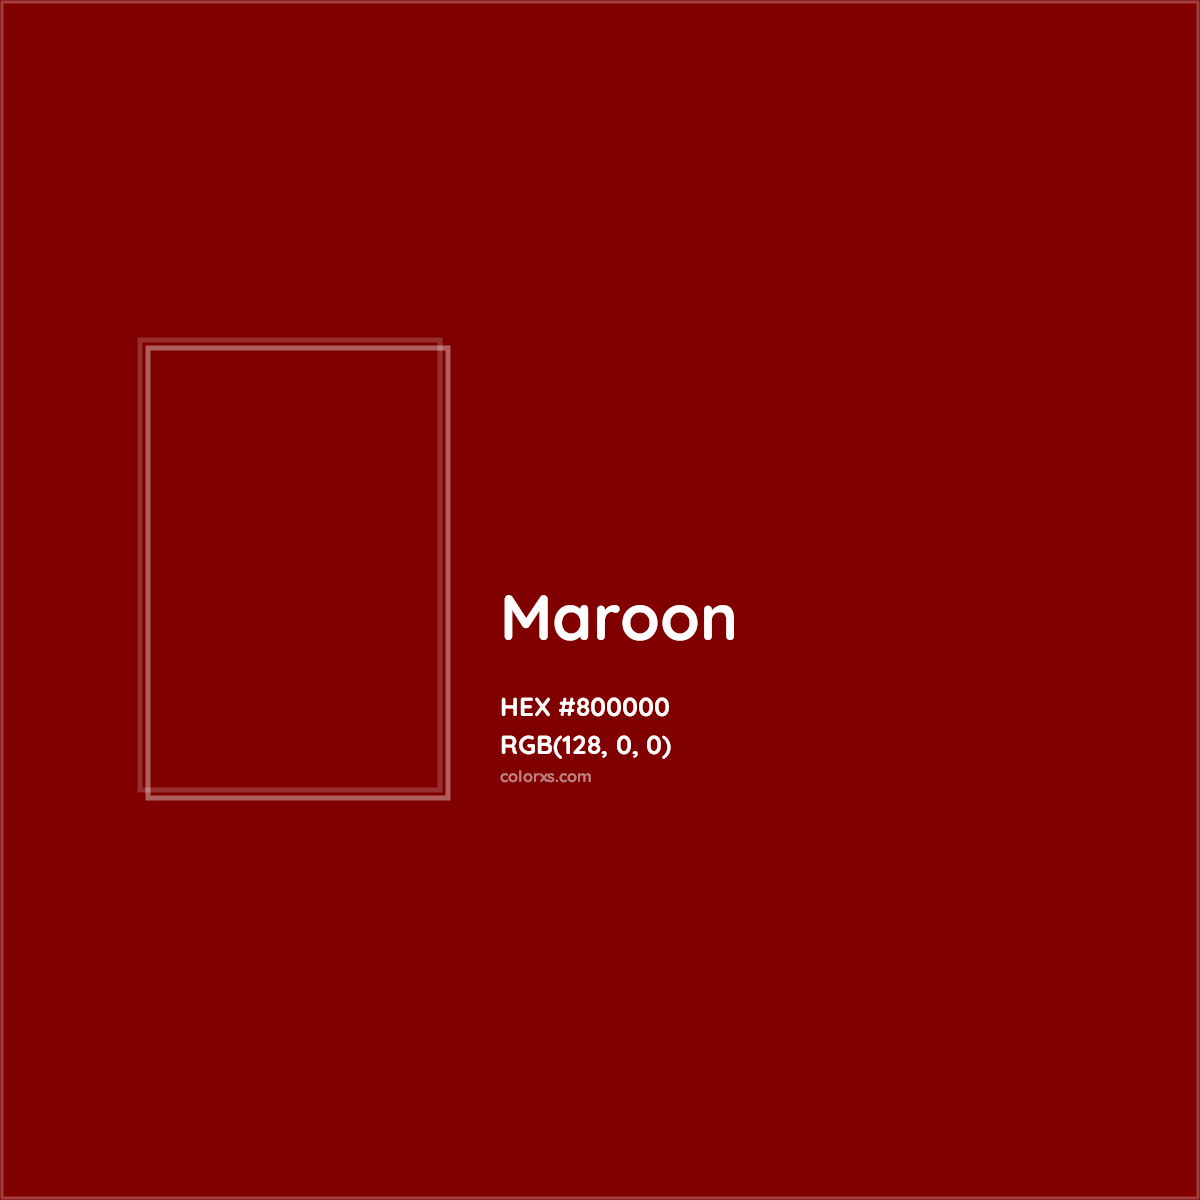 HEX #800000 Maroon - Color Code